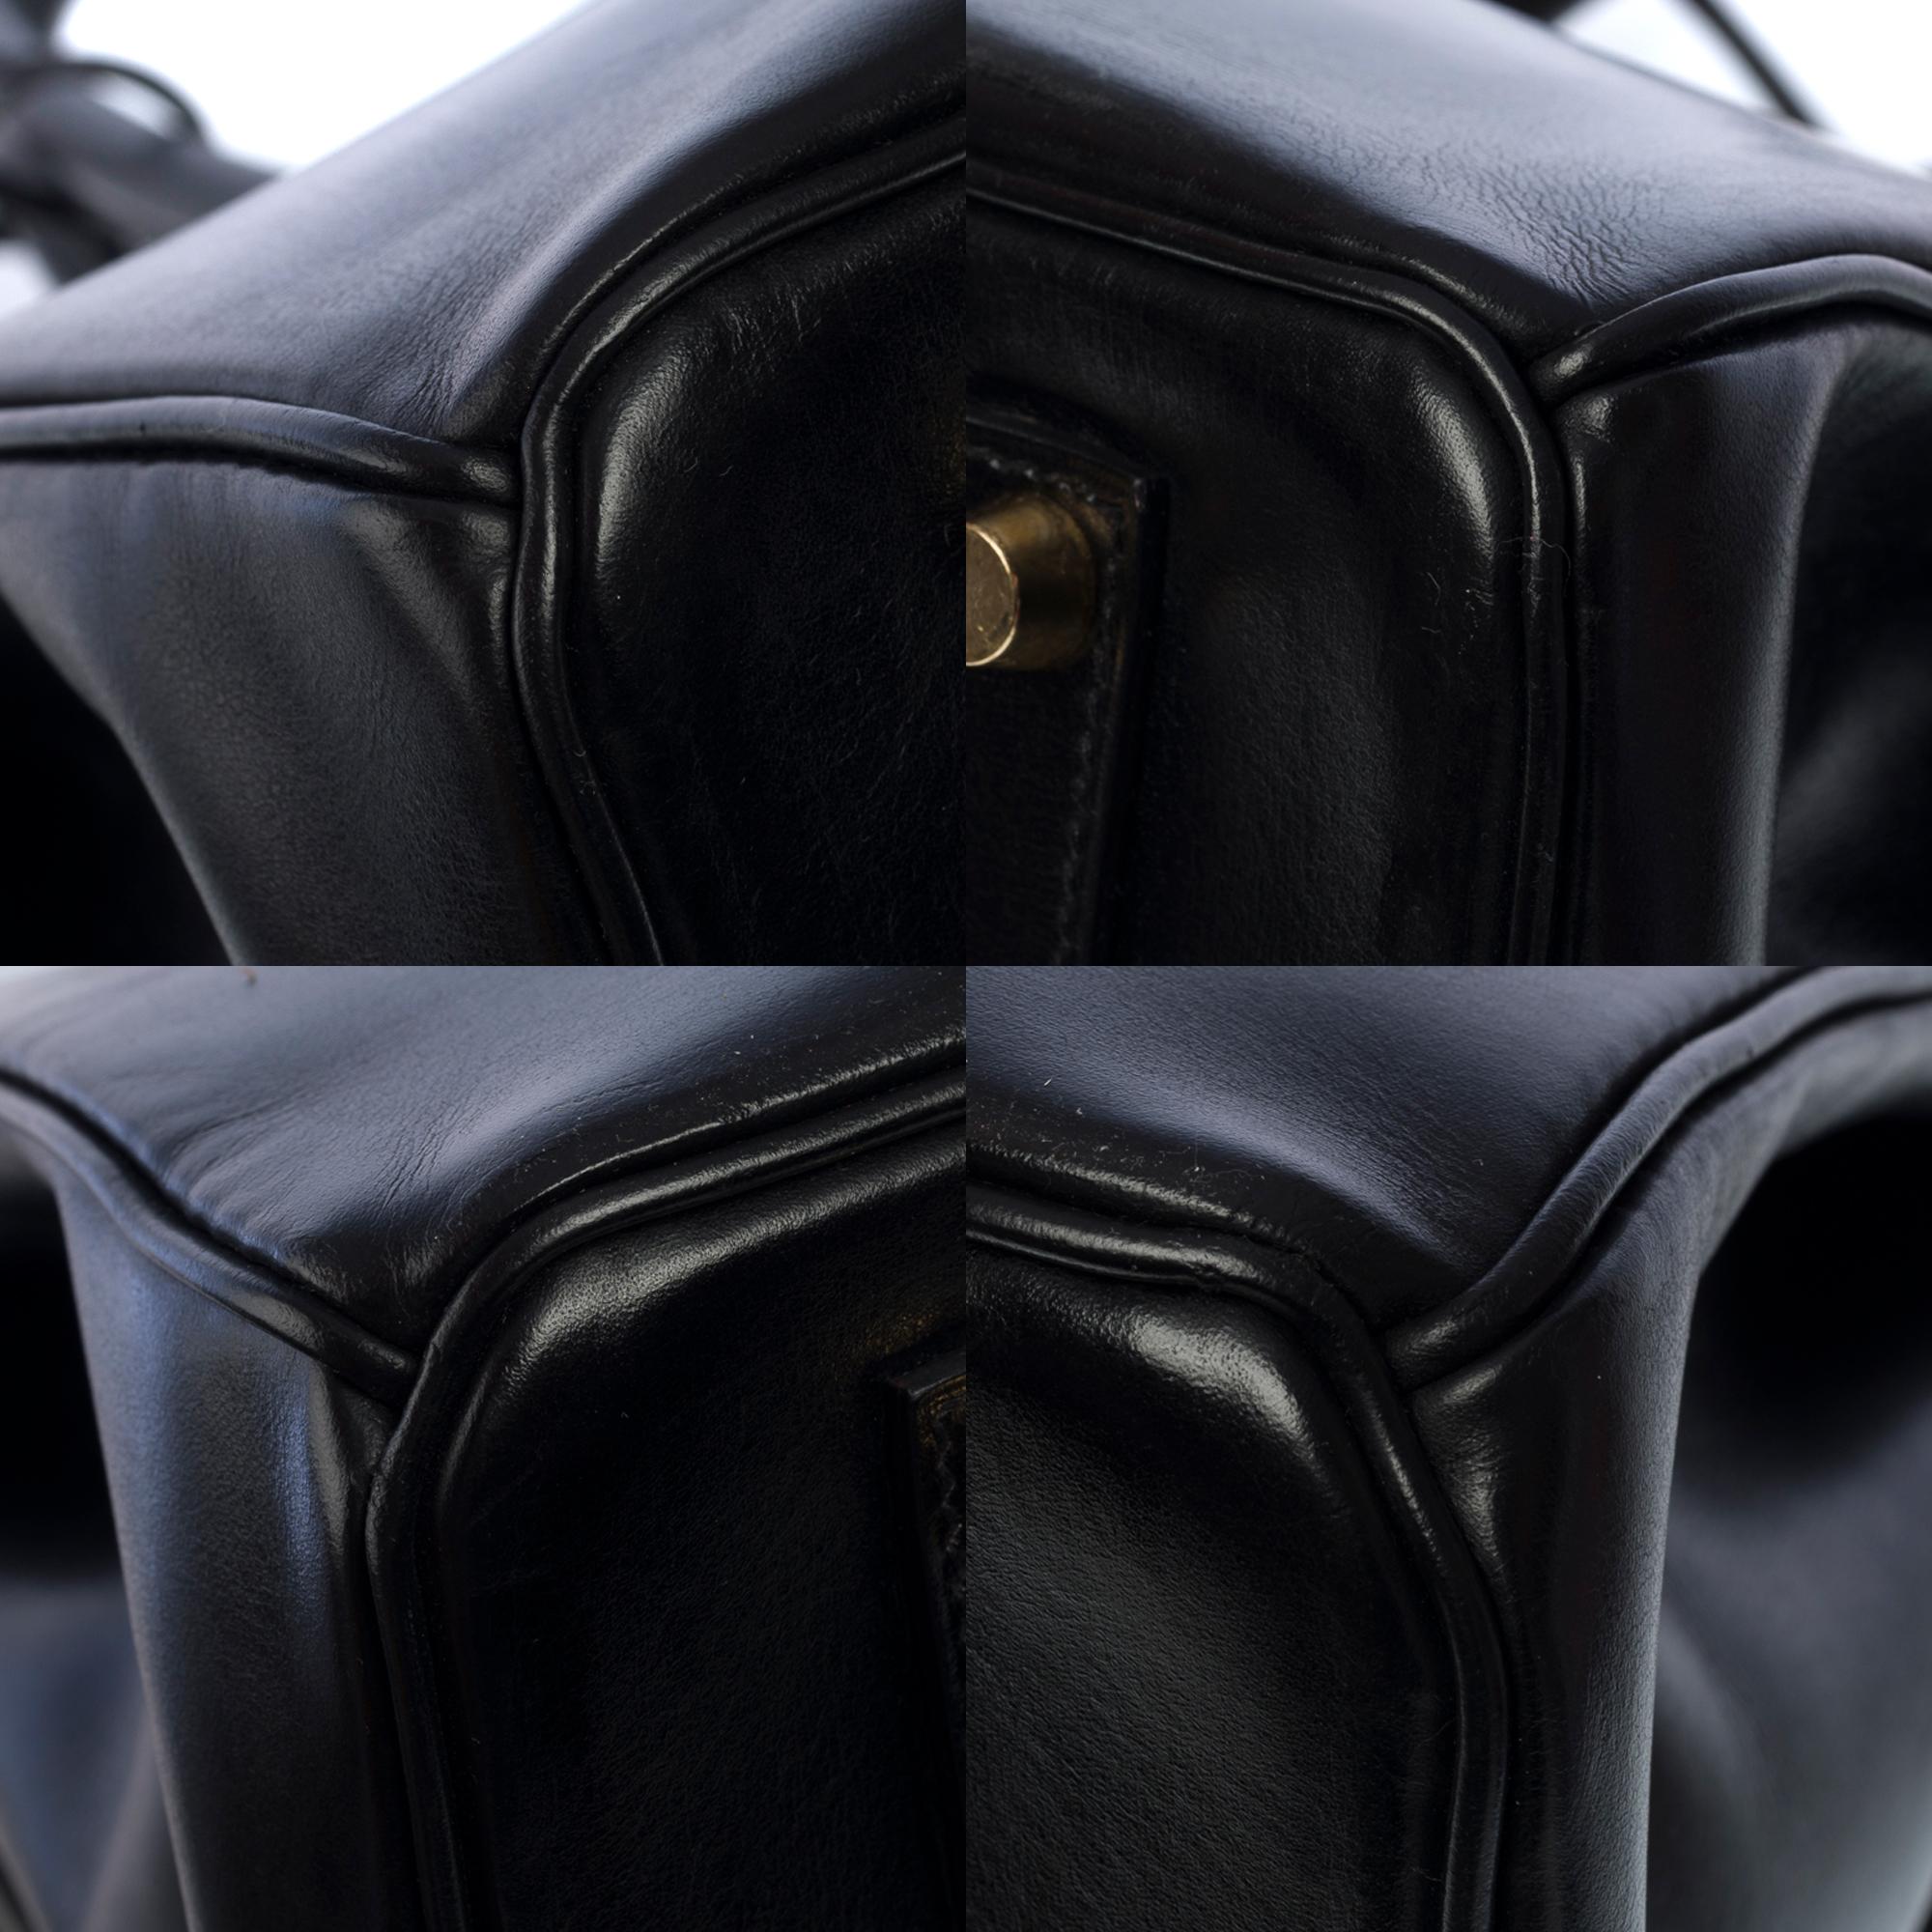 Amazing & Rare Hermès Birkin 35 handbag in black box calfskin leather, GHW 4